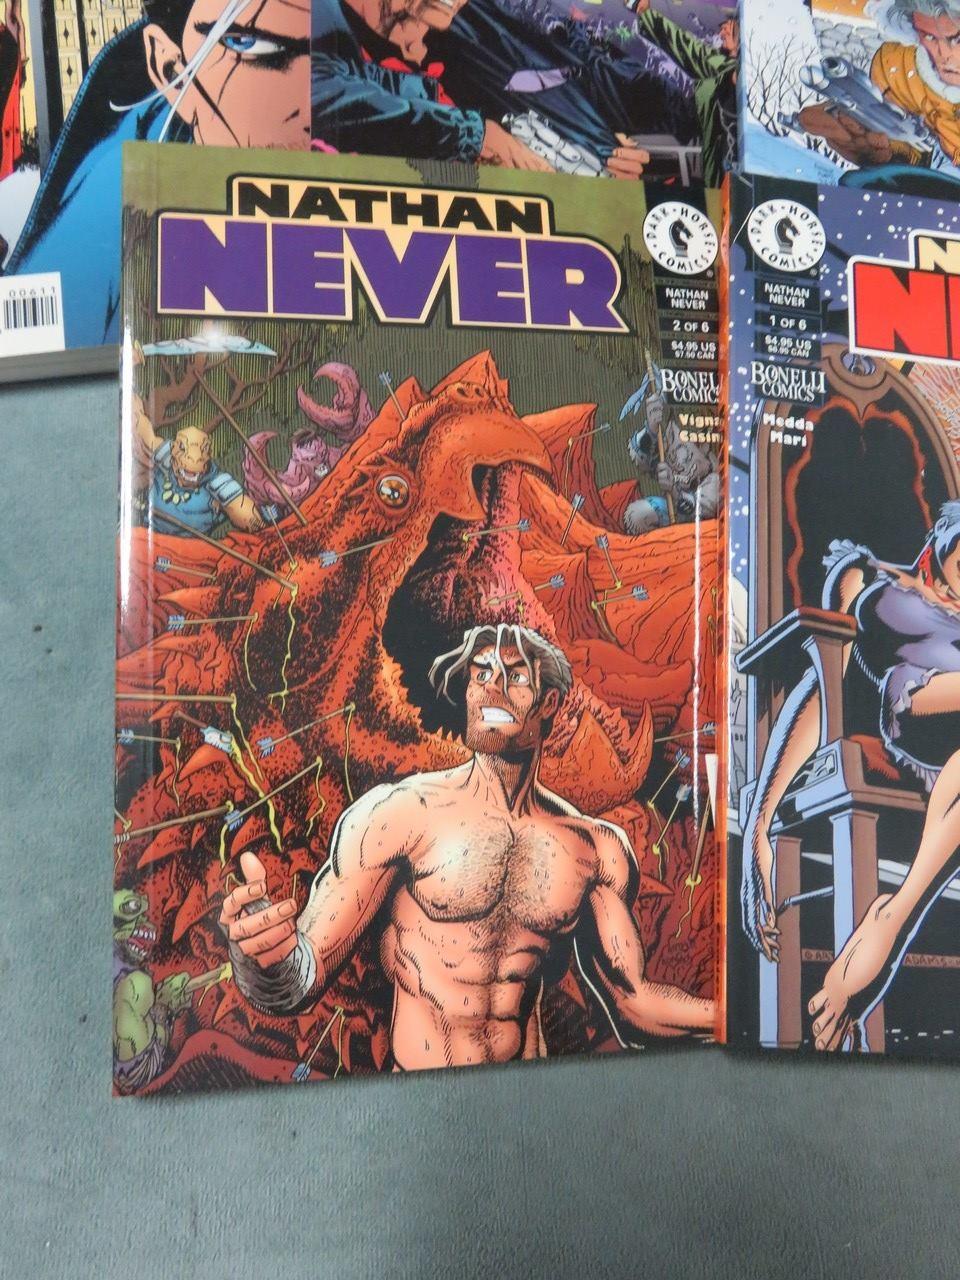 Nathan Never Trade Paperbacks Vol's 1-6